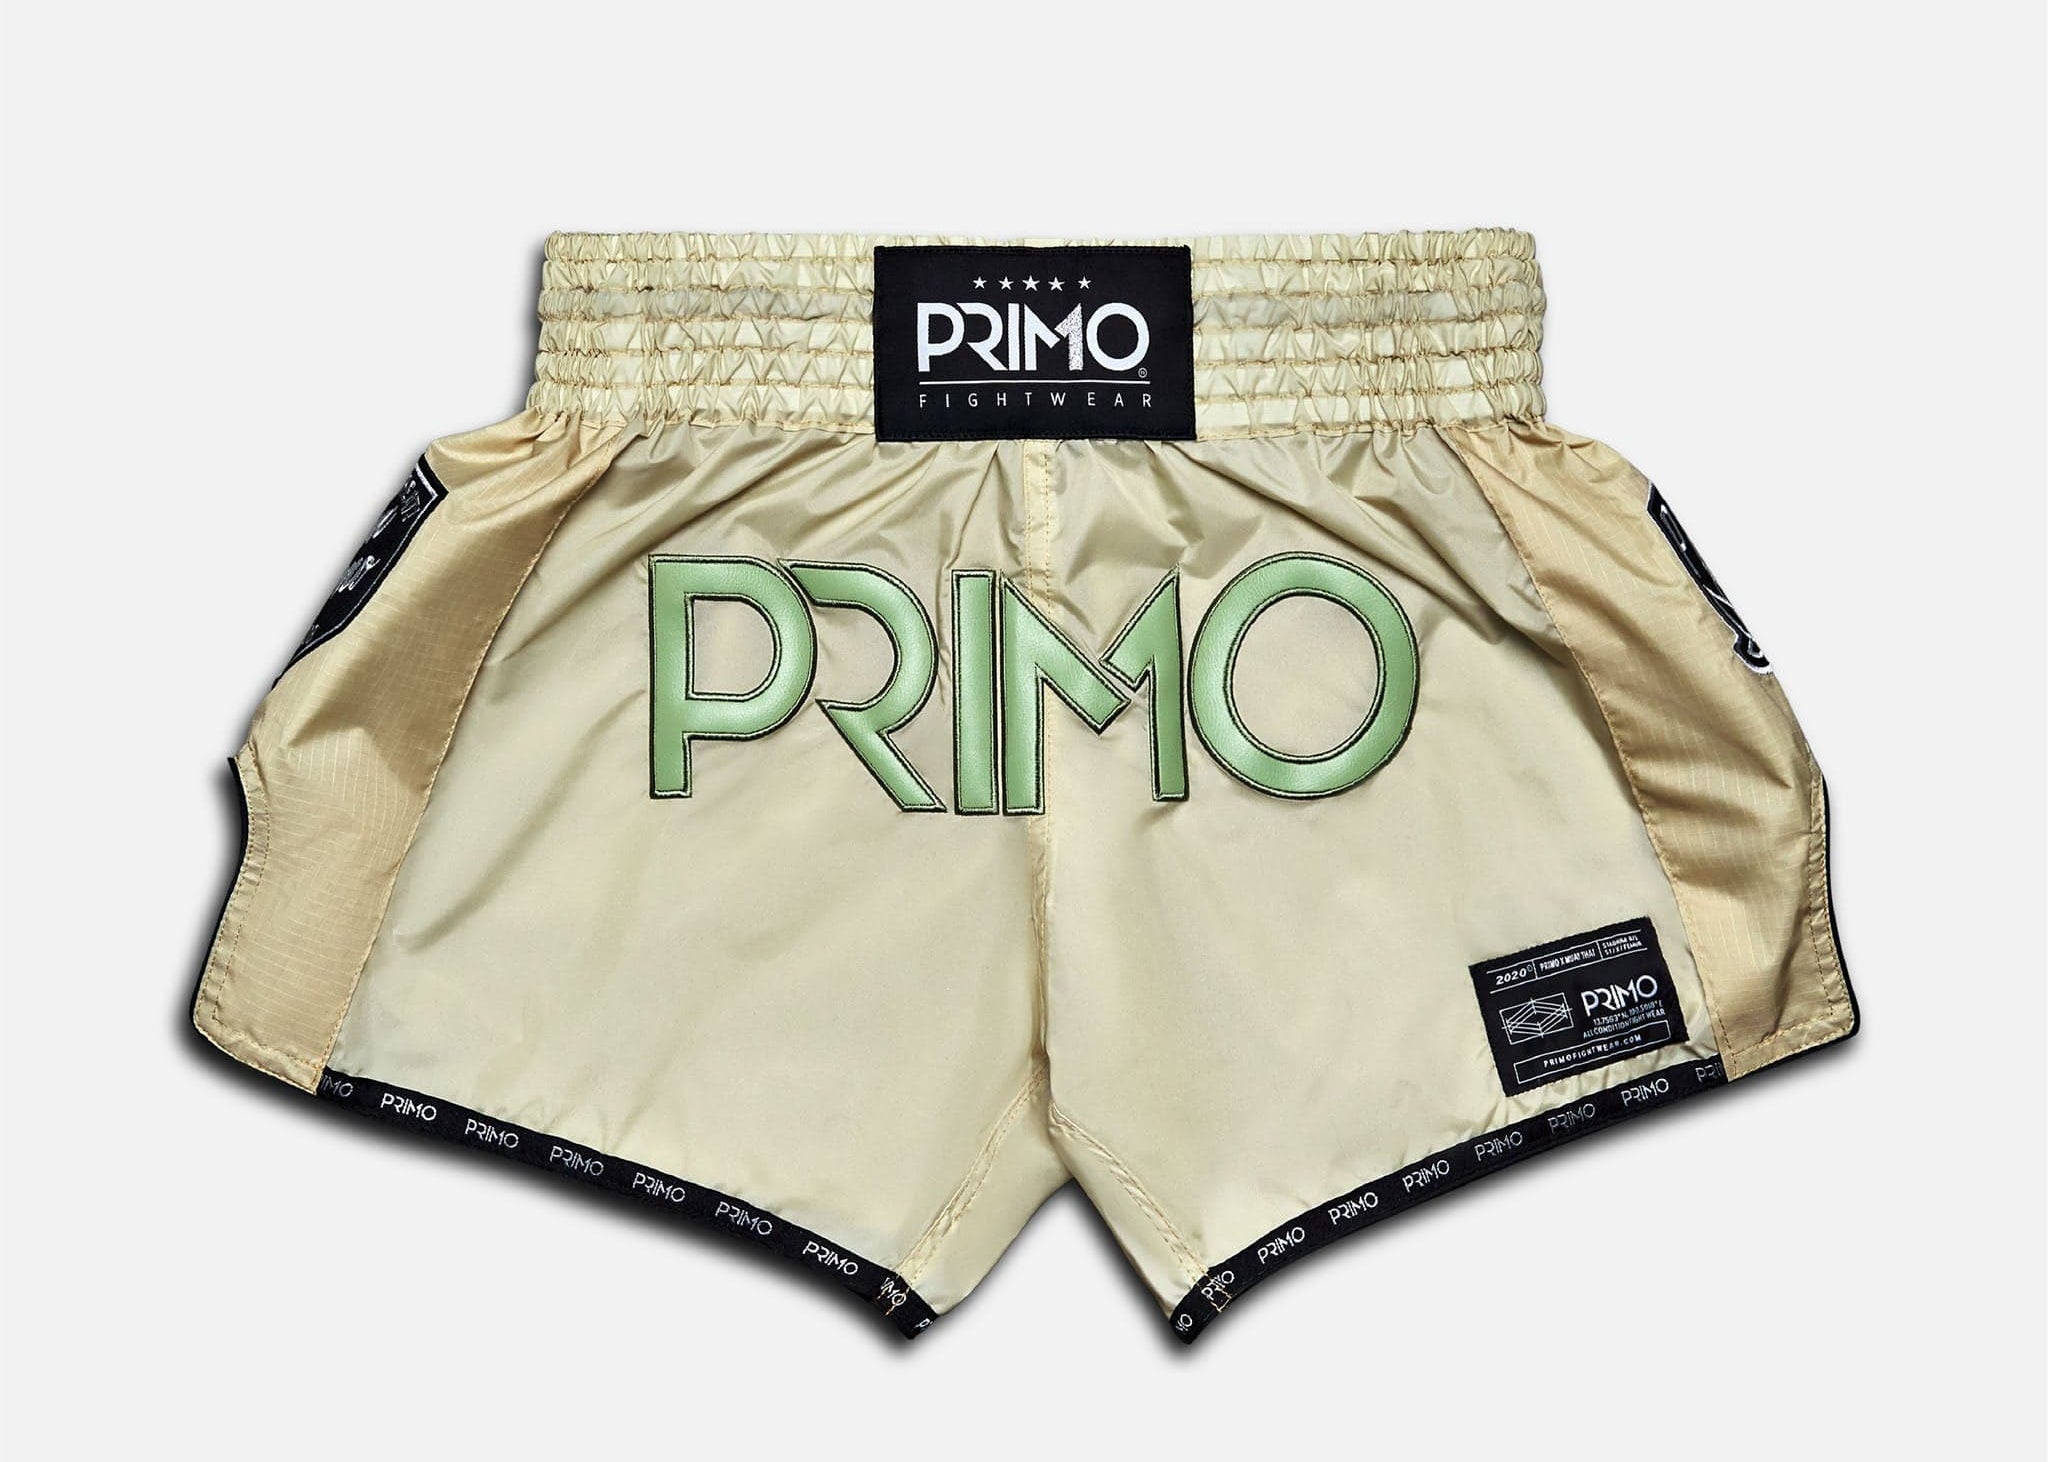 Primo Fight Wear Official Muay Thai Shorts - Super Nylon - Mantis Tan